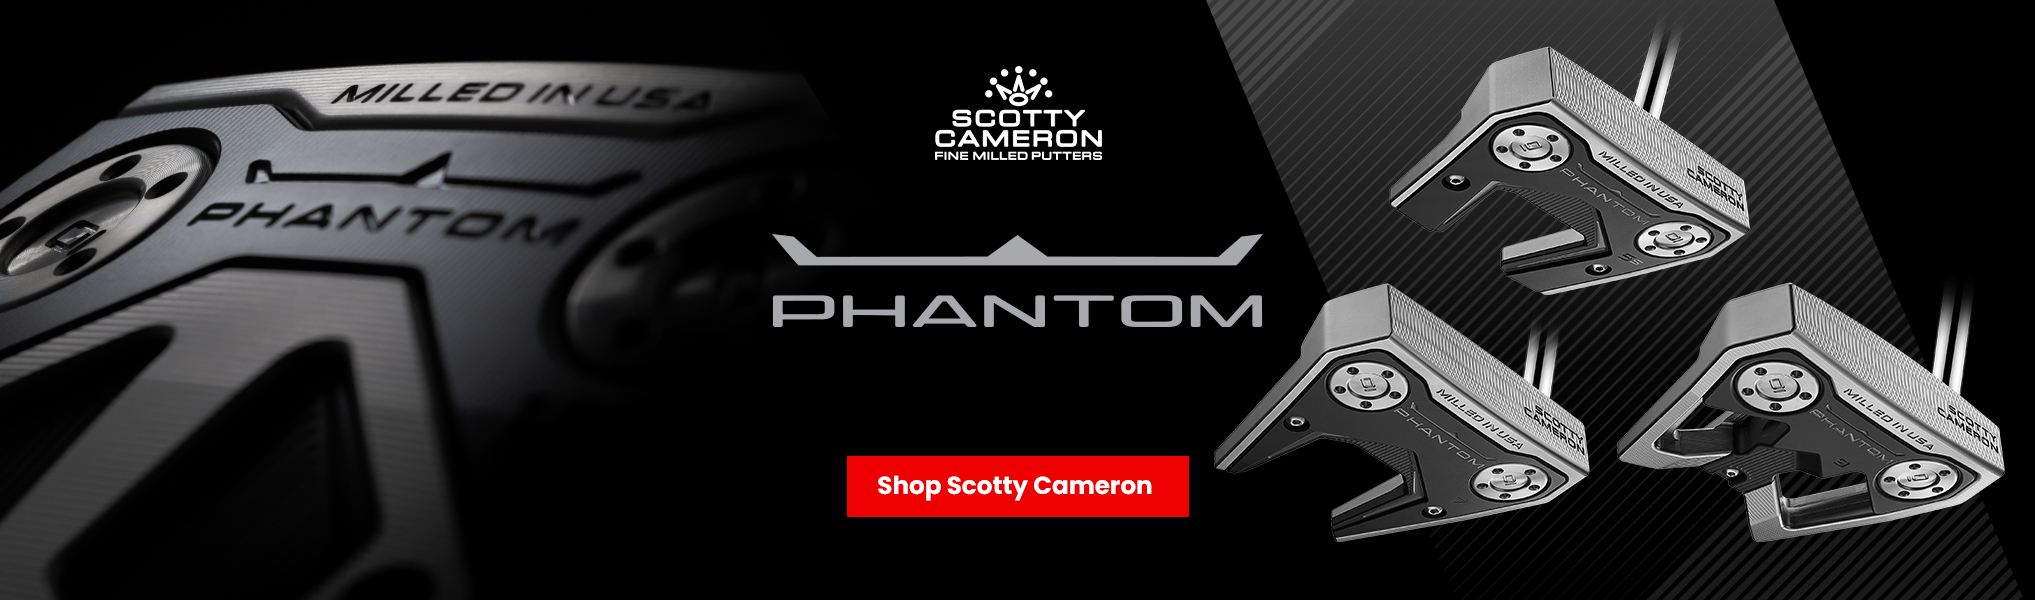 Scotty Cameron Phantom Now Available 